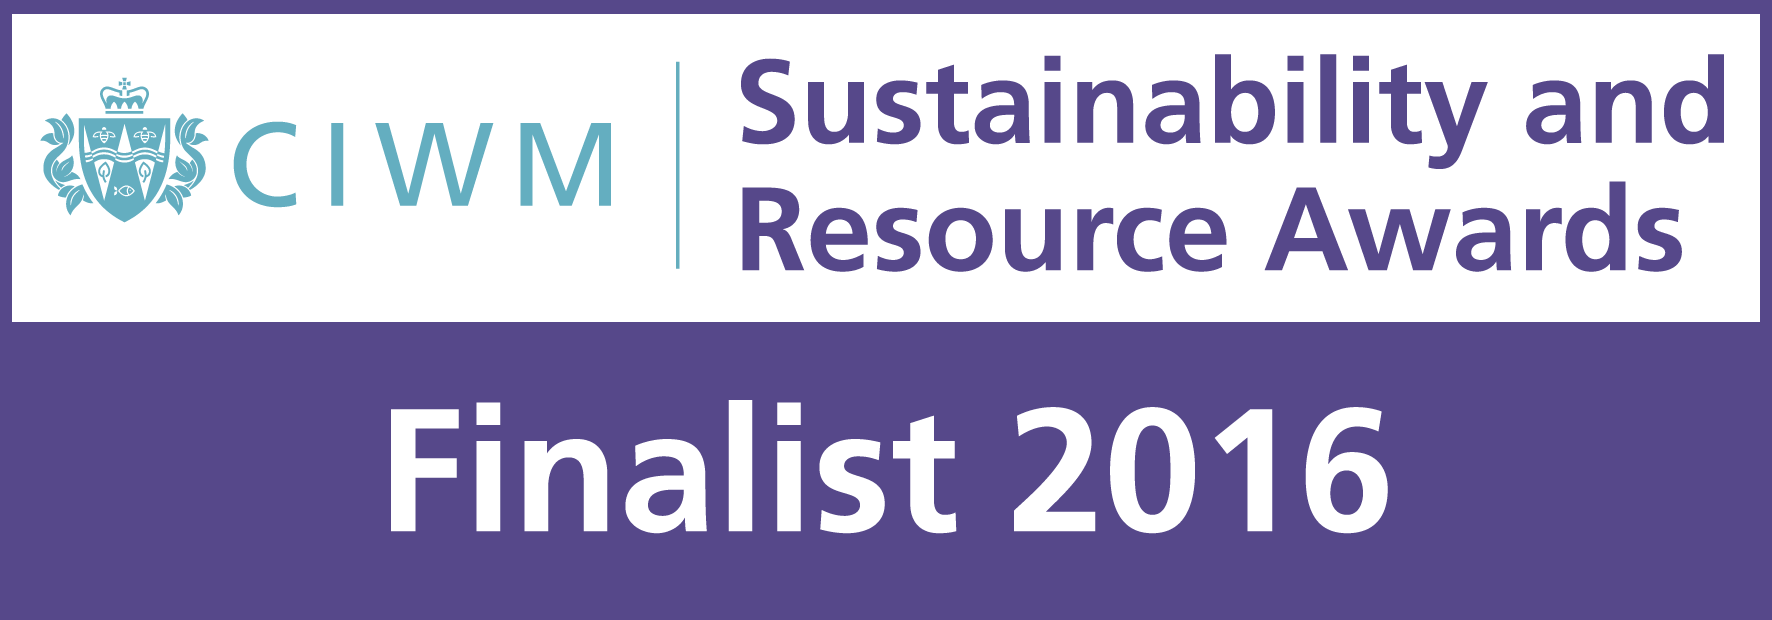 sustainability and resource awards finalist 2016 CIWM